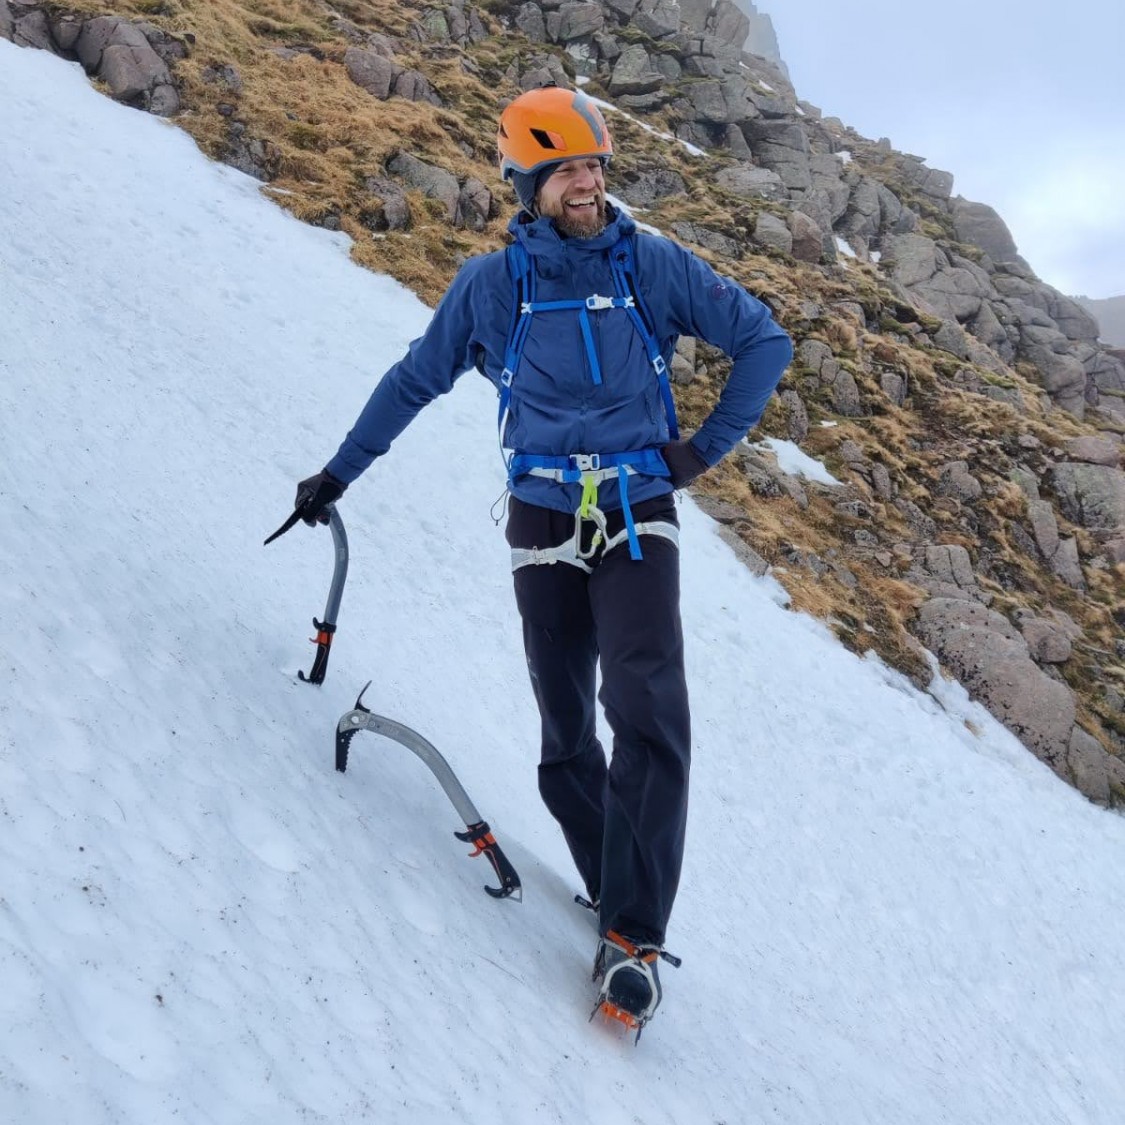 Edelrid Prisma Guide  Ski Mountaineering Climbing Harness